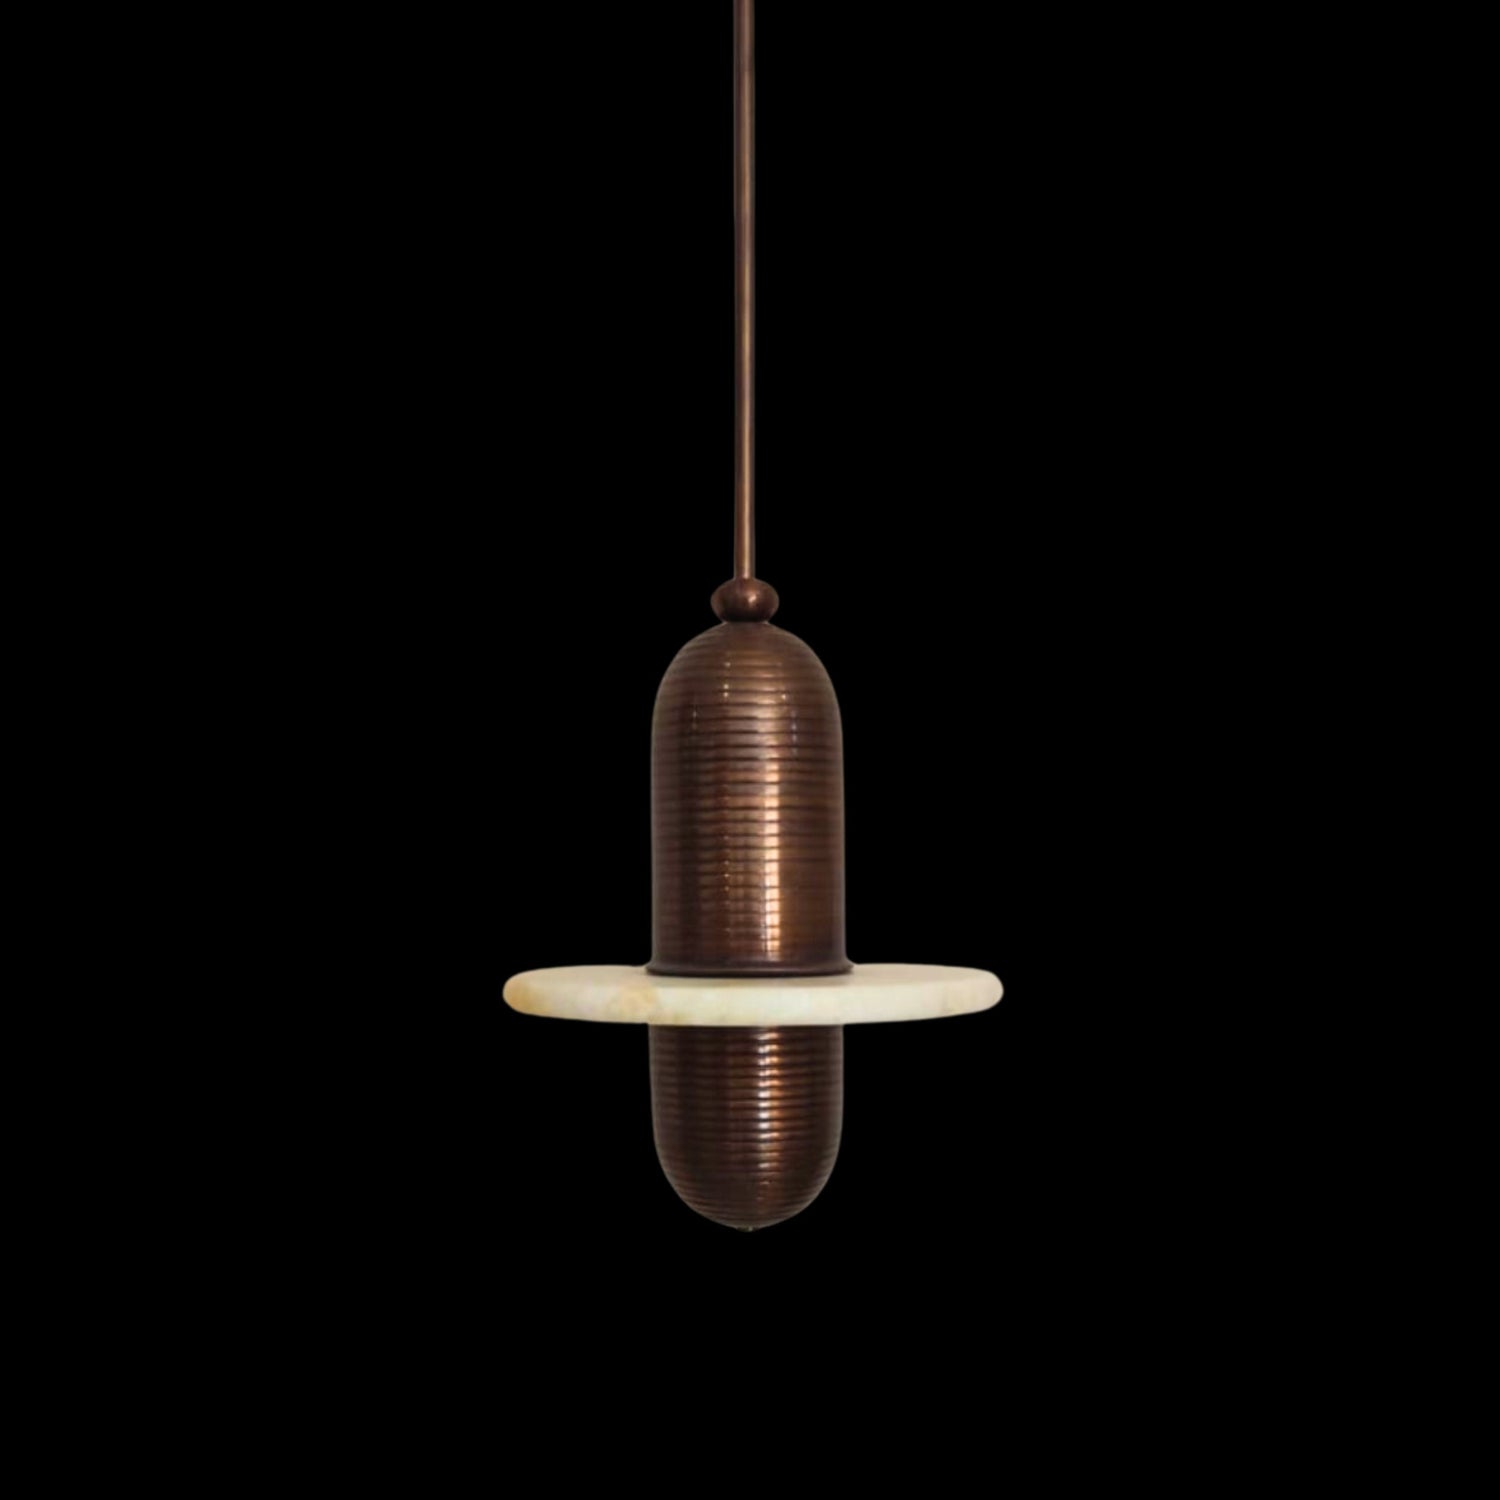 Median Mono Pendant Light - Alabaster Pendent - Modern Pendent Light - Glass Blown lighting for Home and office - Hotel Bar pendants - Brass